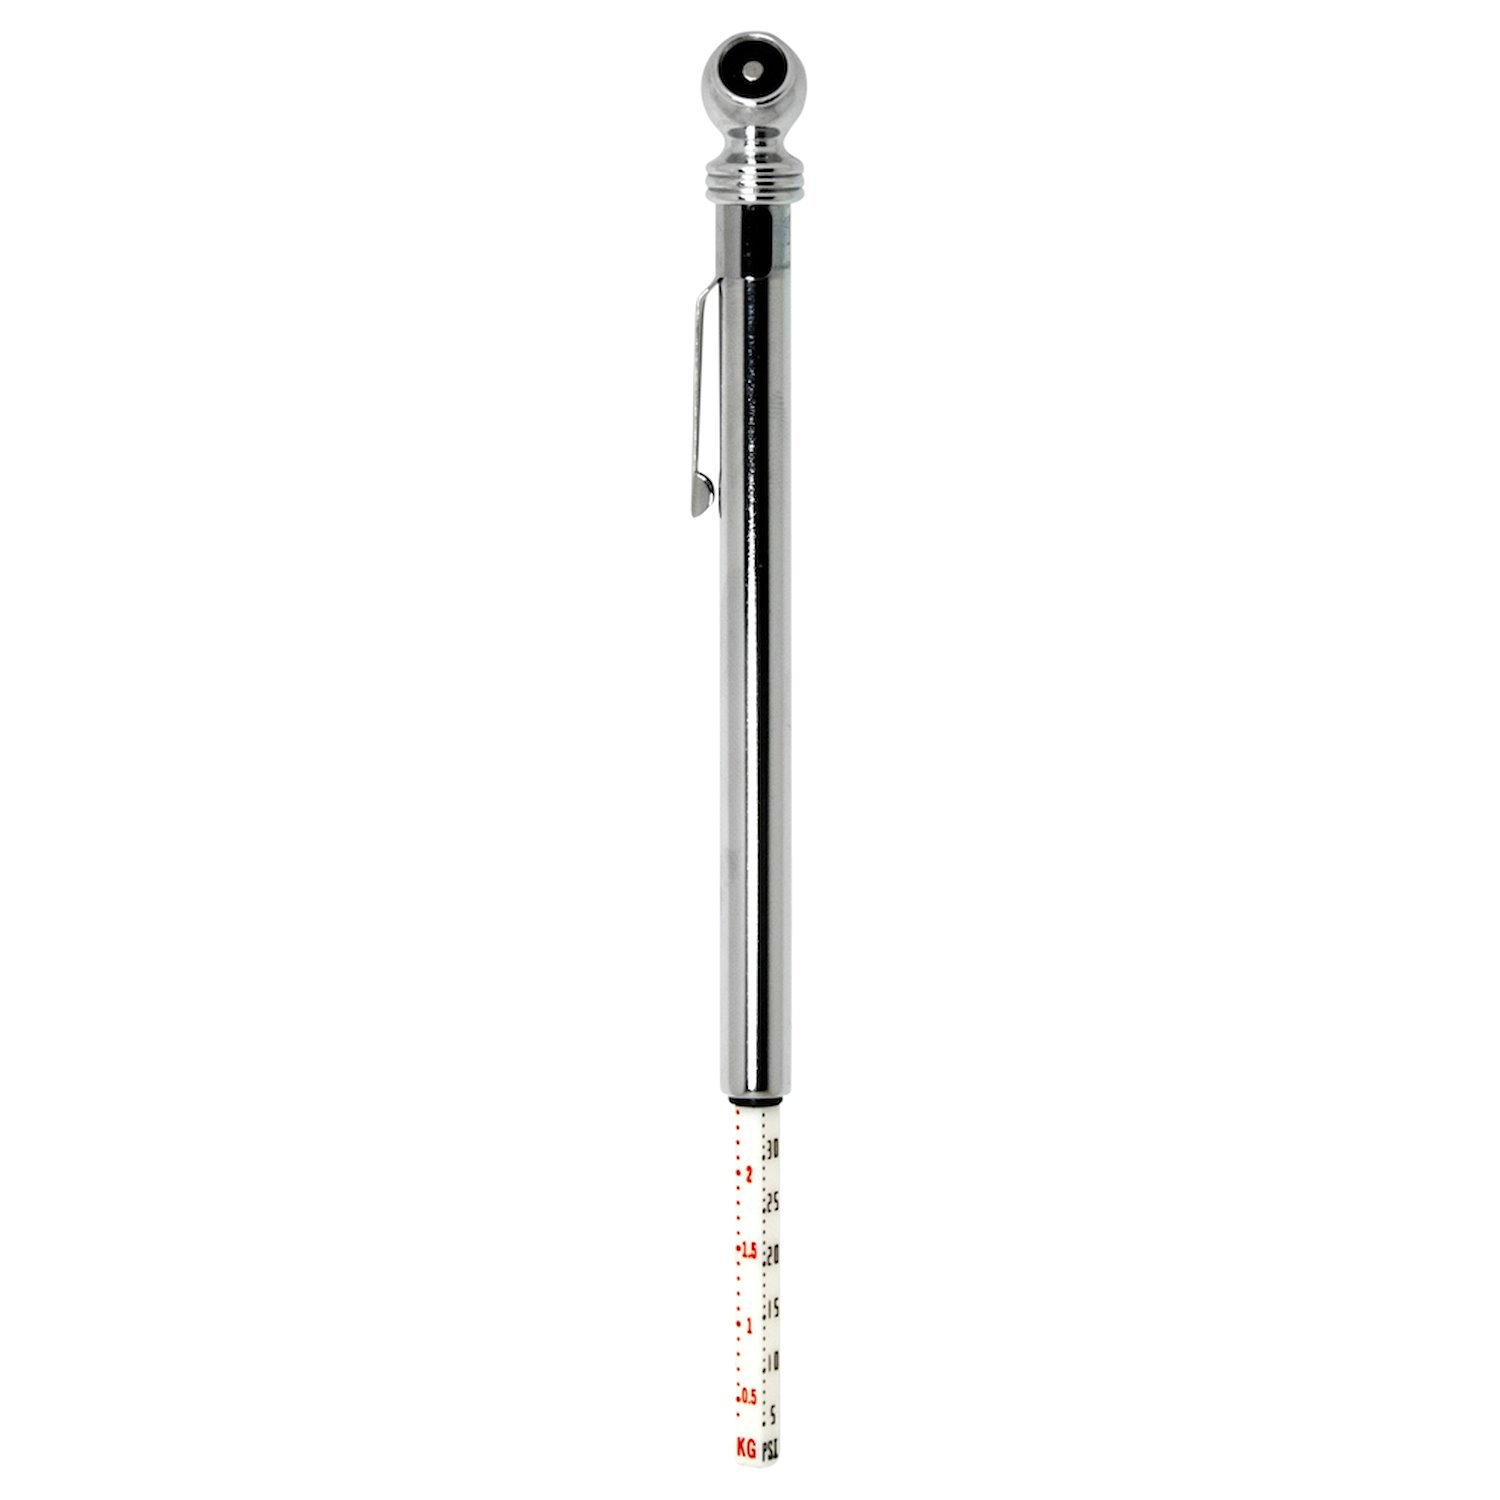 TG1 Tire Pressure Gauge Pencil, 0-50 Psi